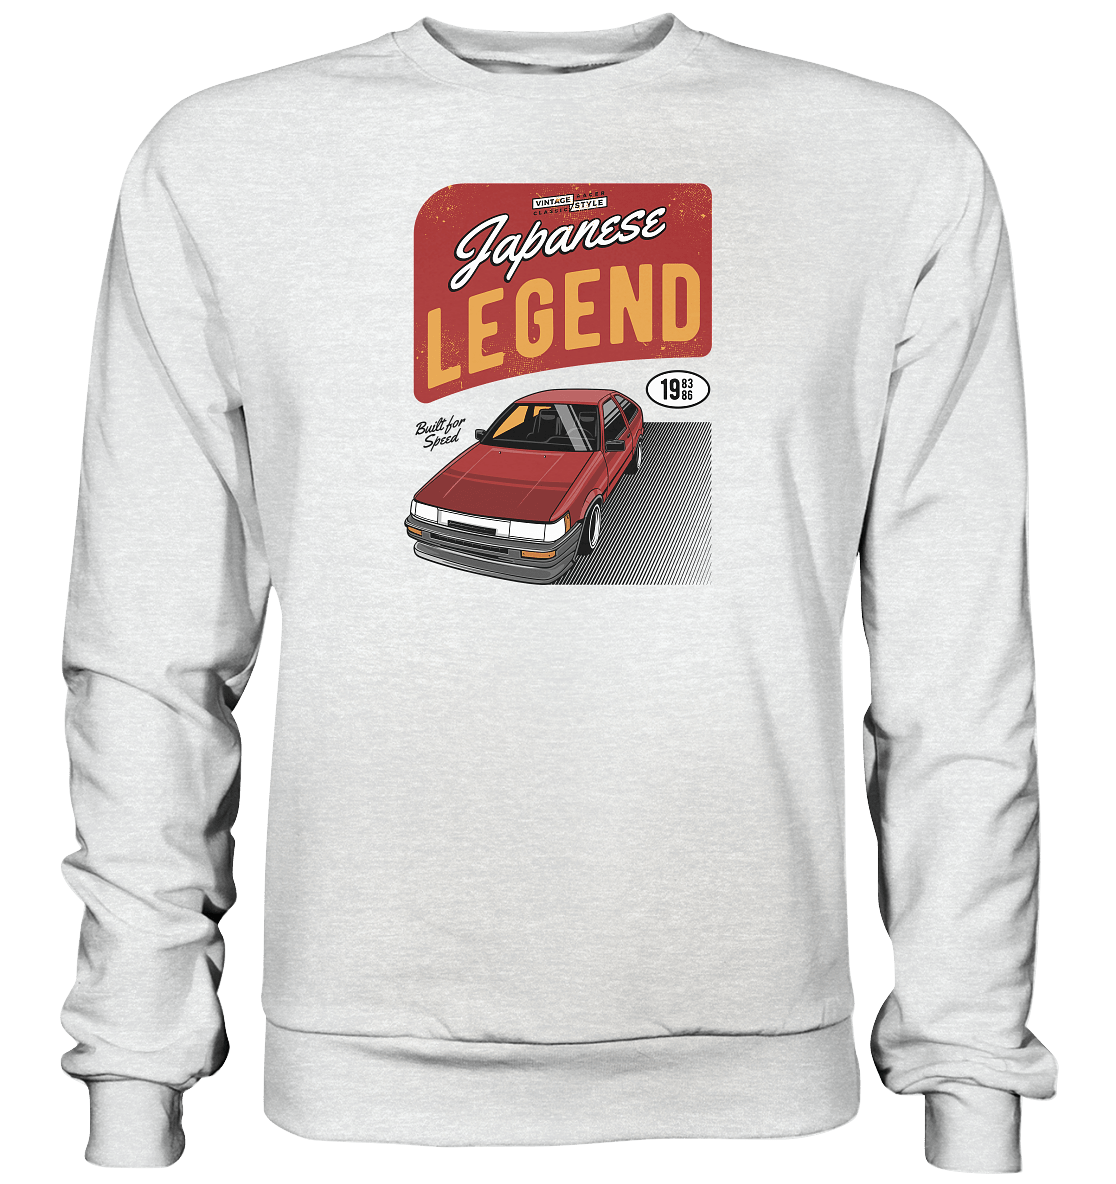 Corolla AE86 Levin - Premium Sweatshirt - MotoMerch.de